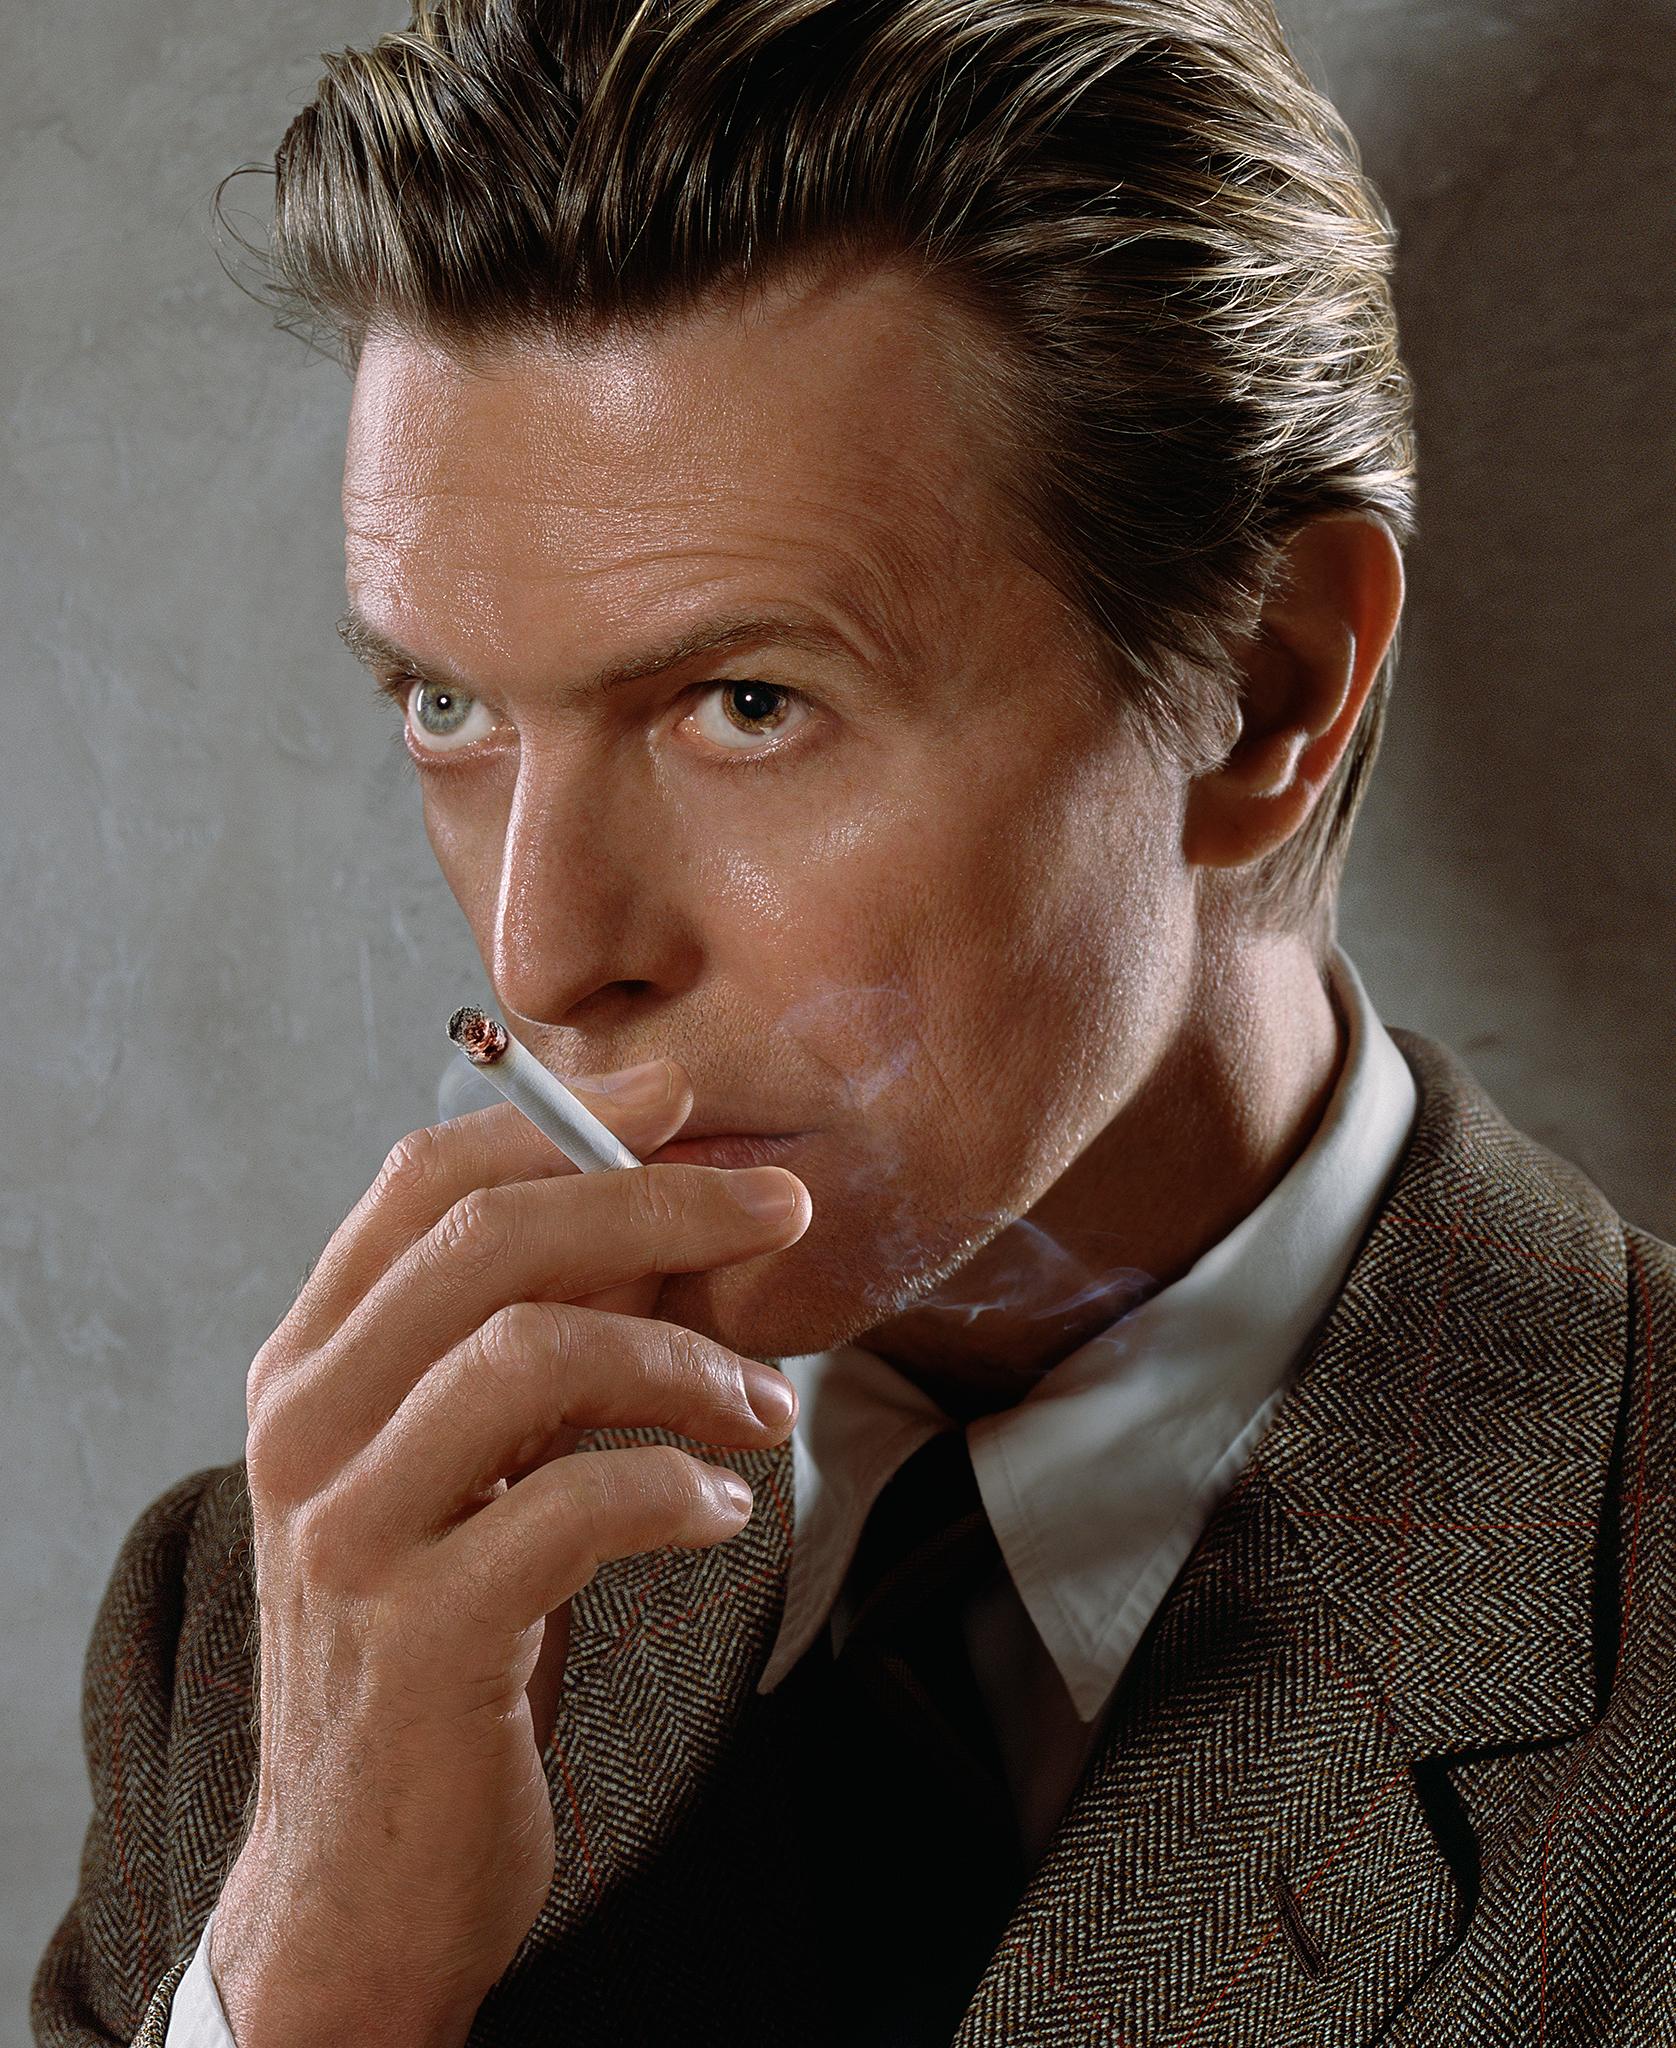 Markus Klinko Color Photograph – David Bowie: Rauchen